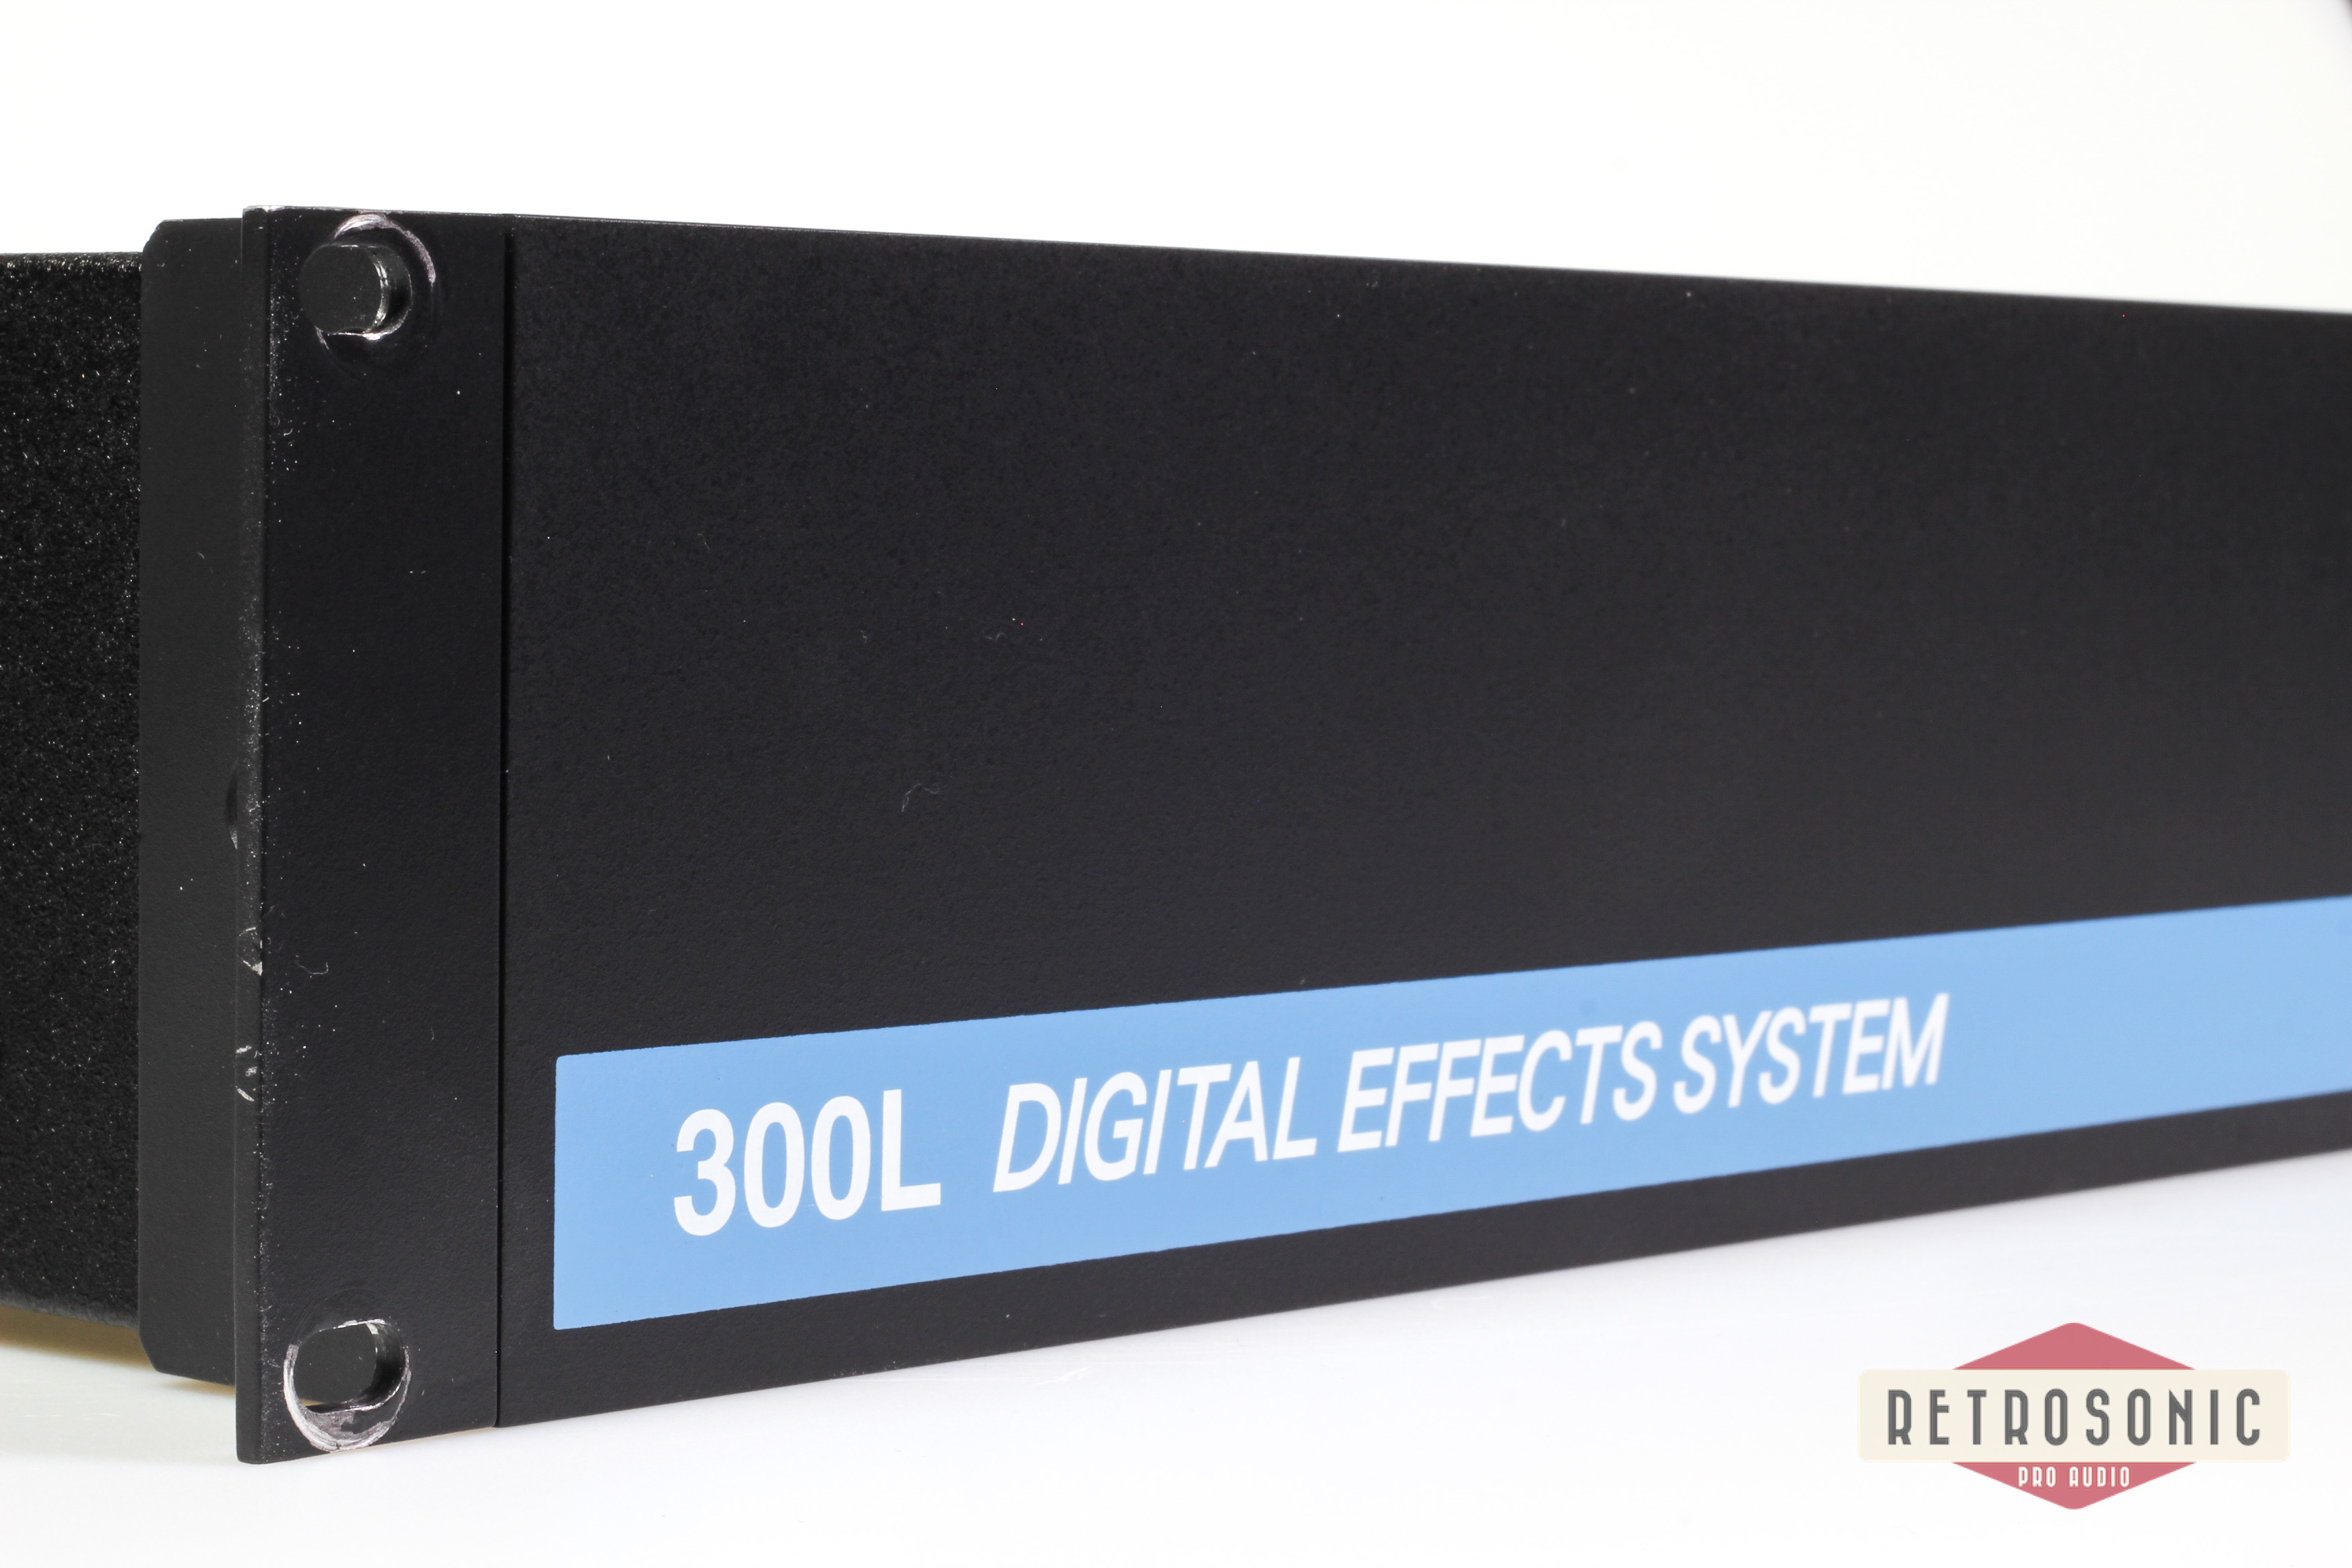 Lexicon 300L Digital Effect Processor with LARC-remote